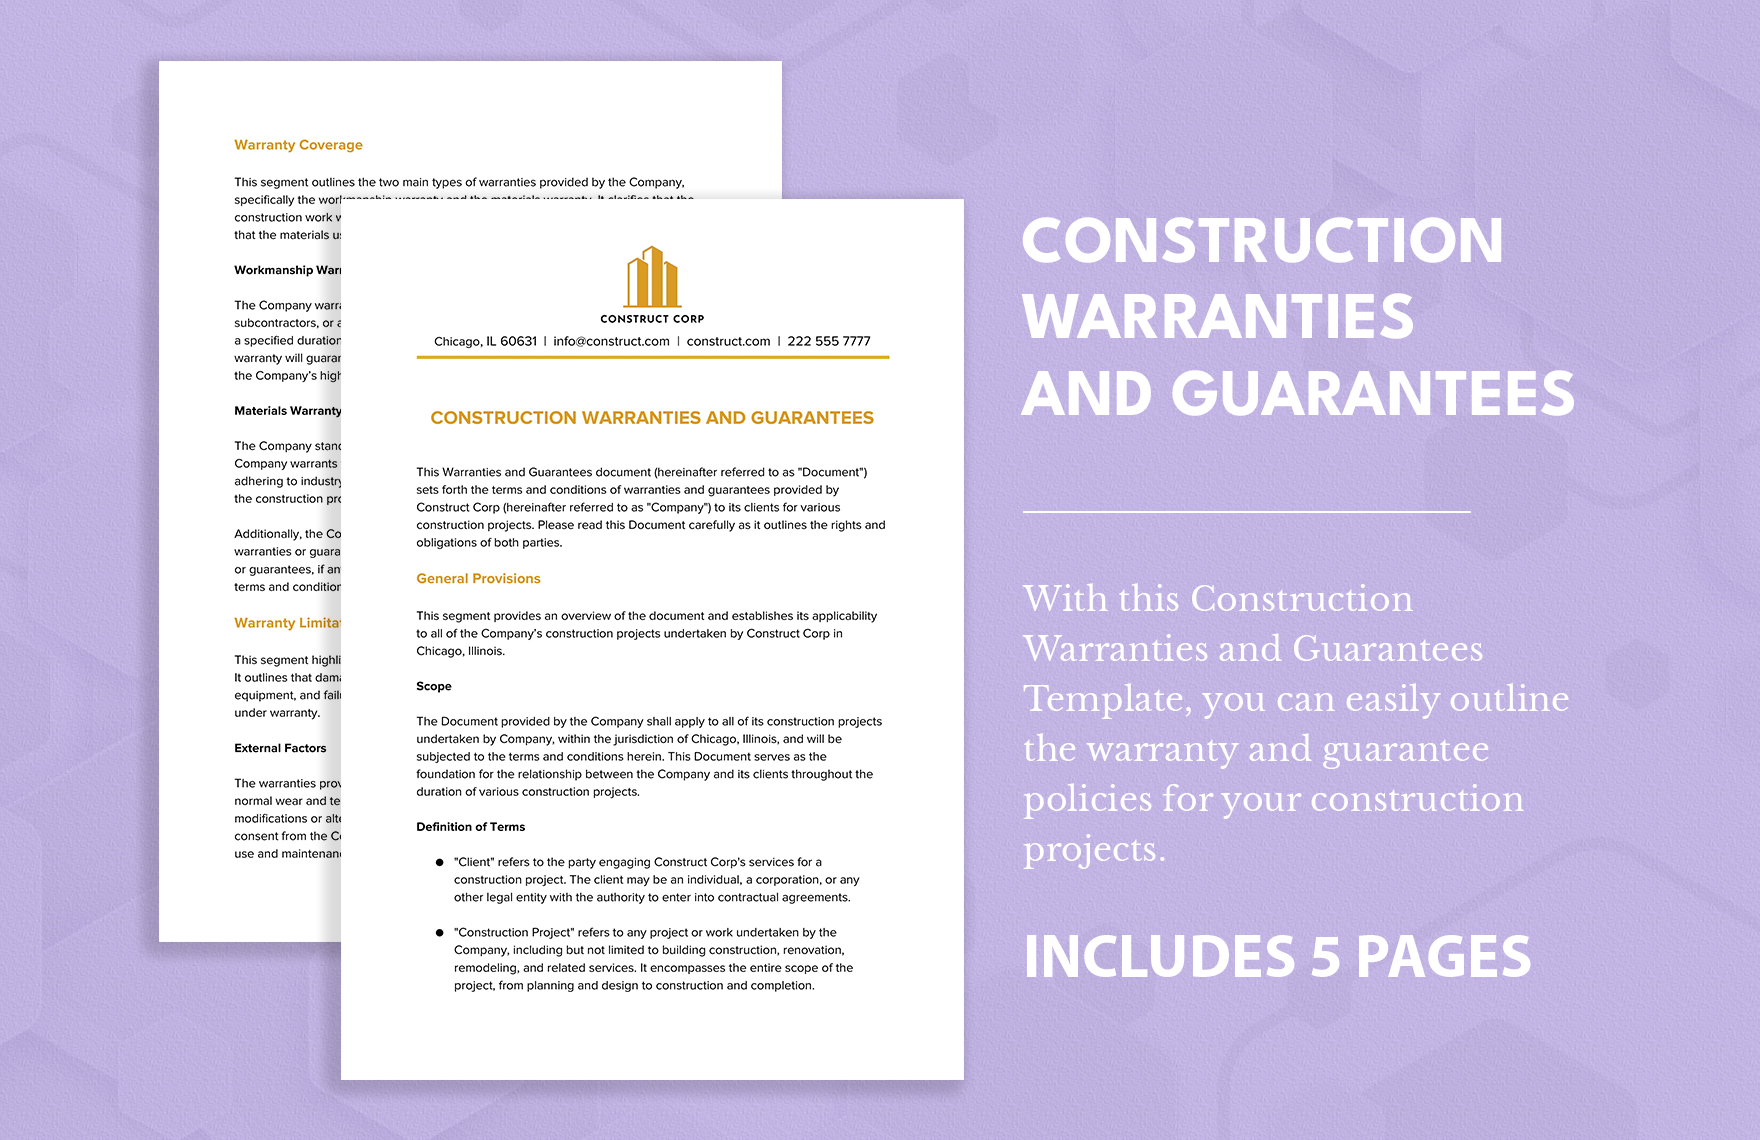 Construction Warranties and Guarantees